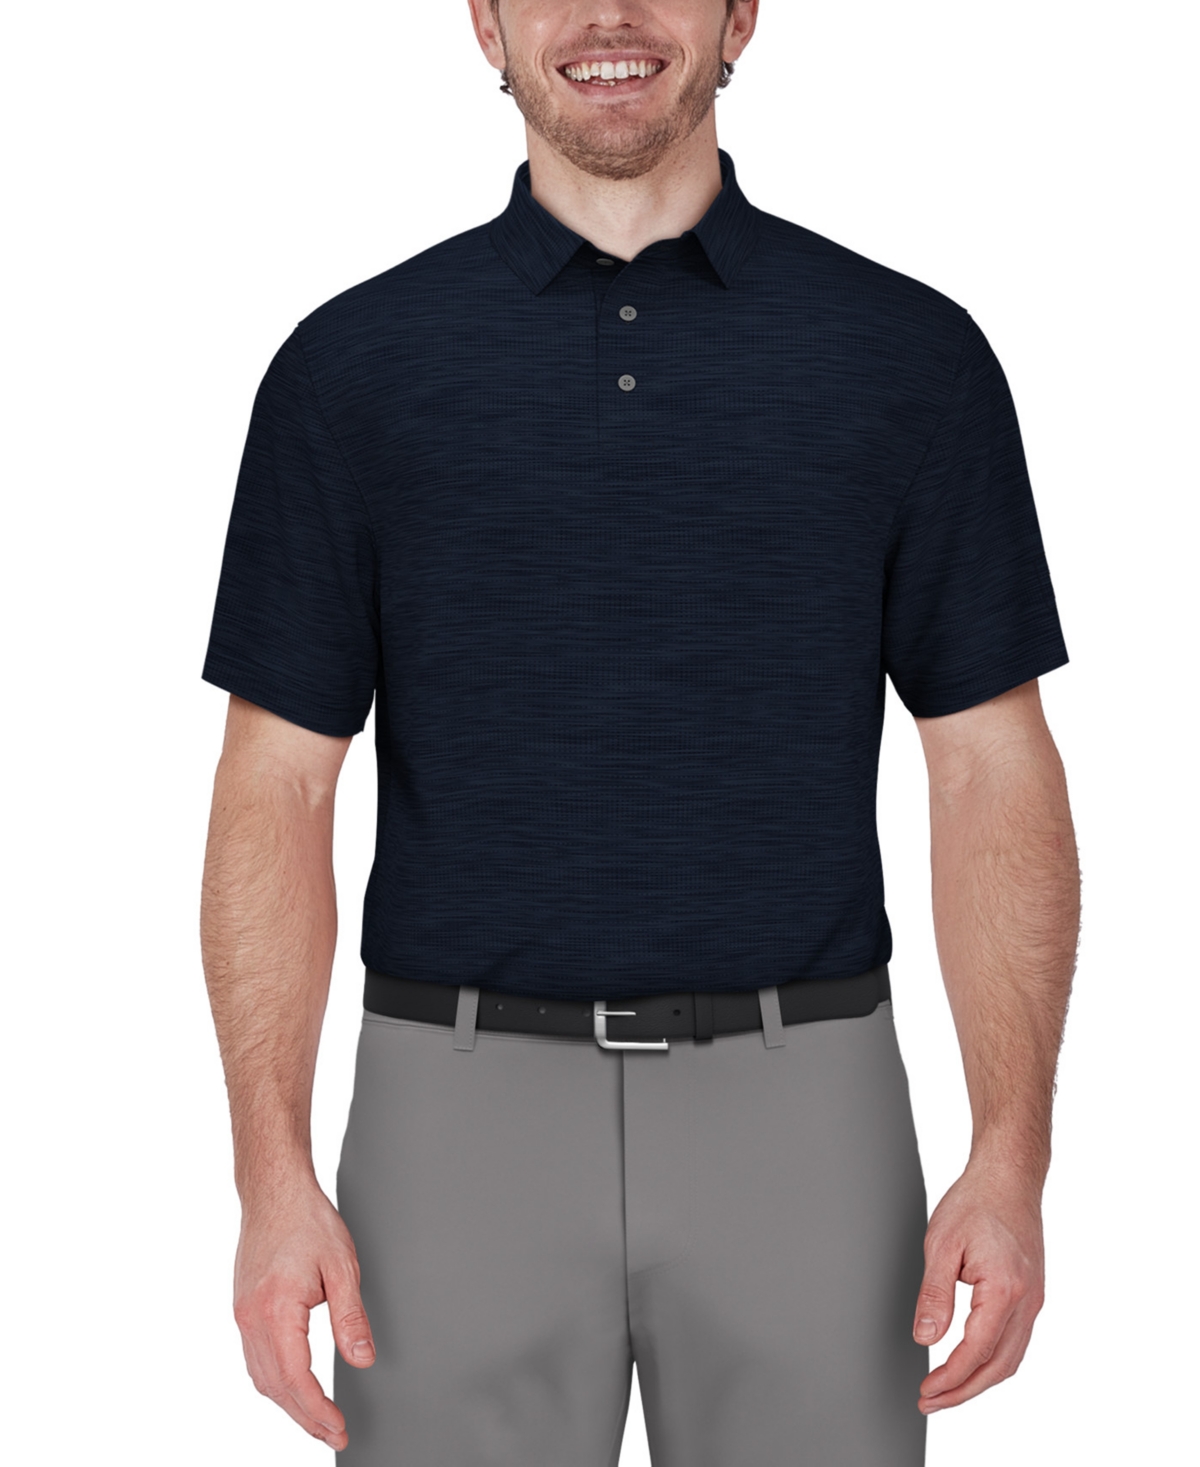 Men's Jasper Airflux Short Sleeve Performance Polo Shirt - Peacoat Ht